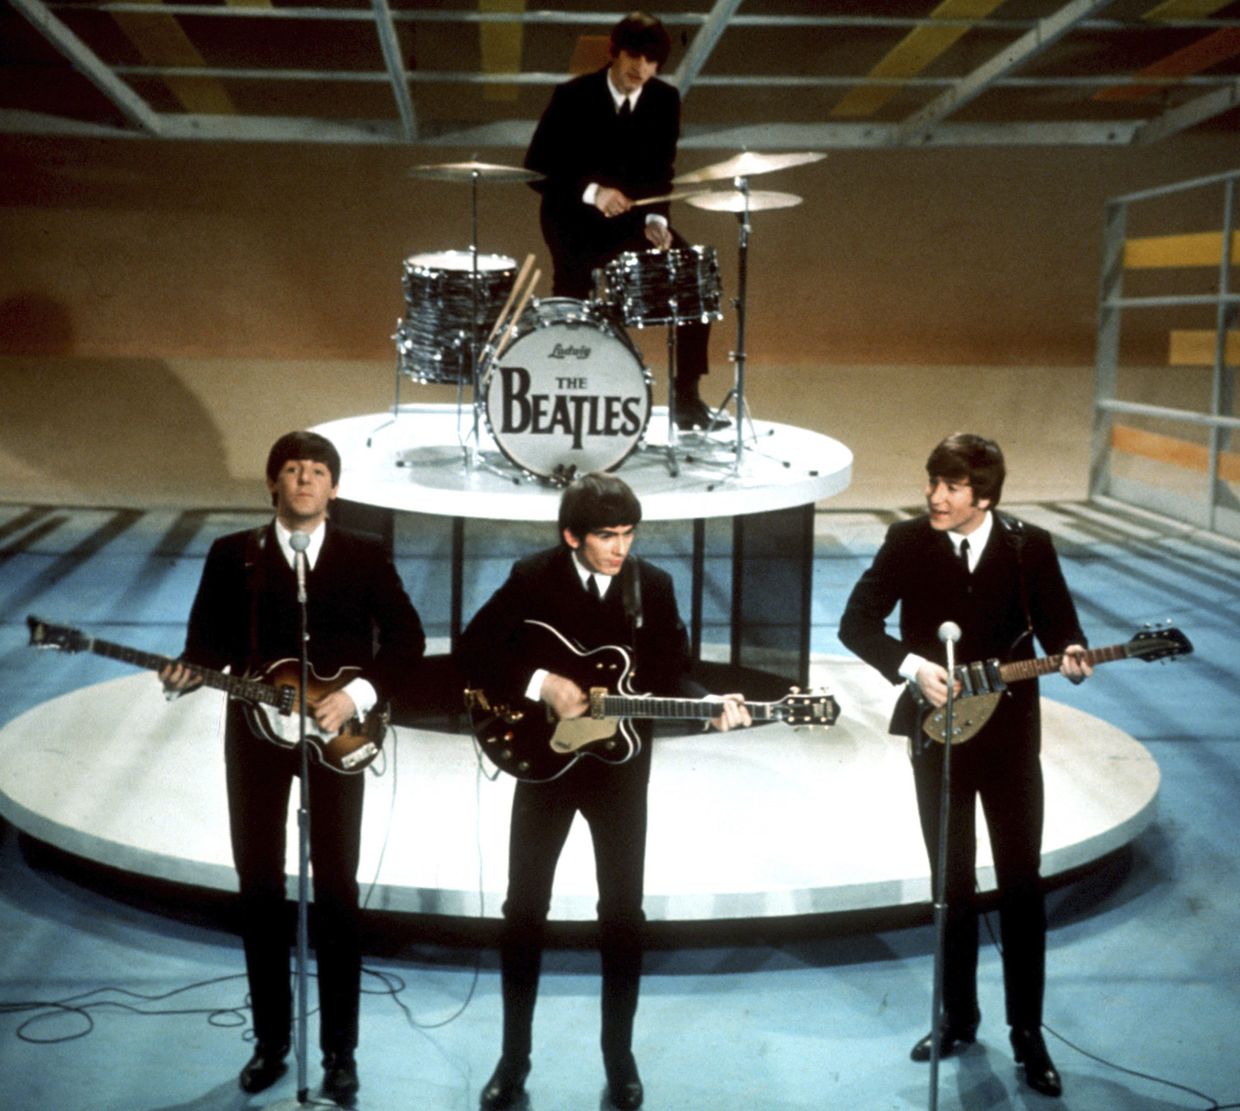 Paul McCartney reunited with his missing 'Beatlemania' bass guitar